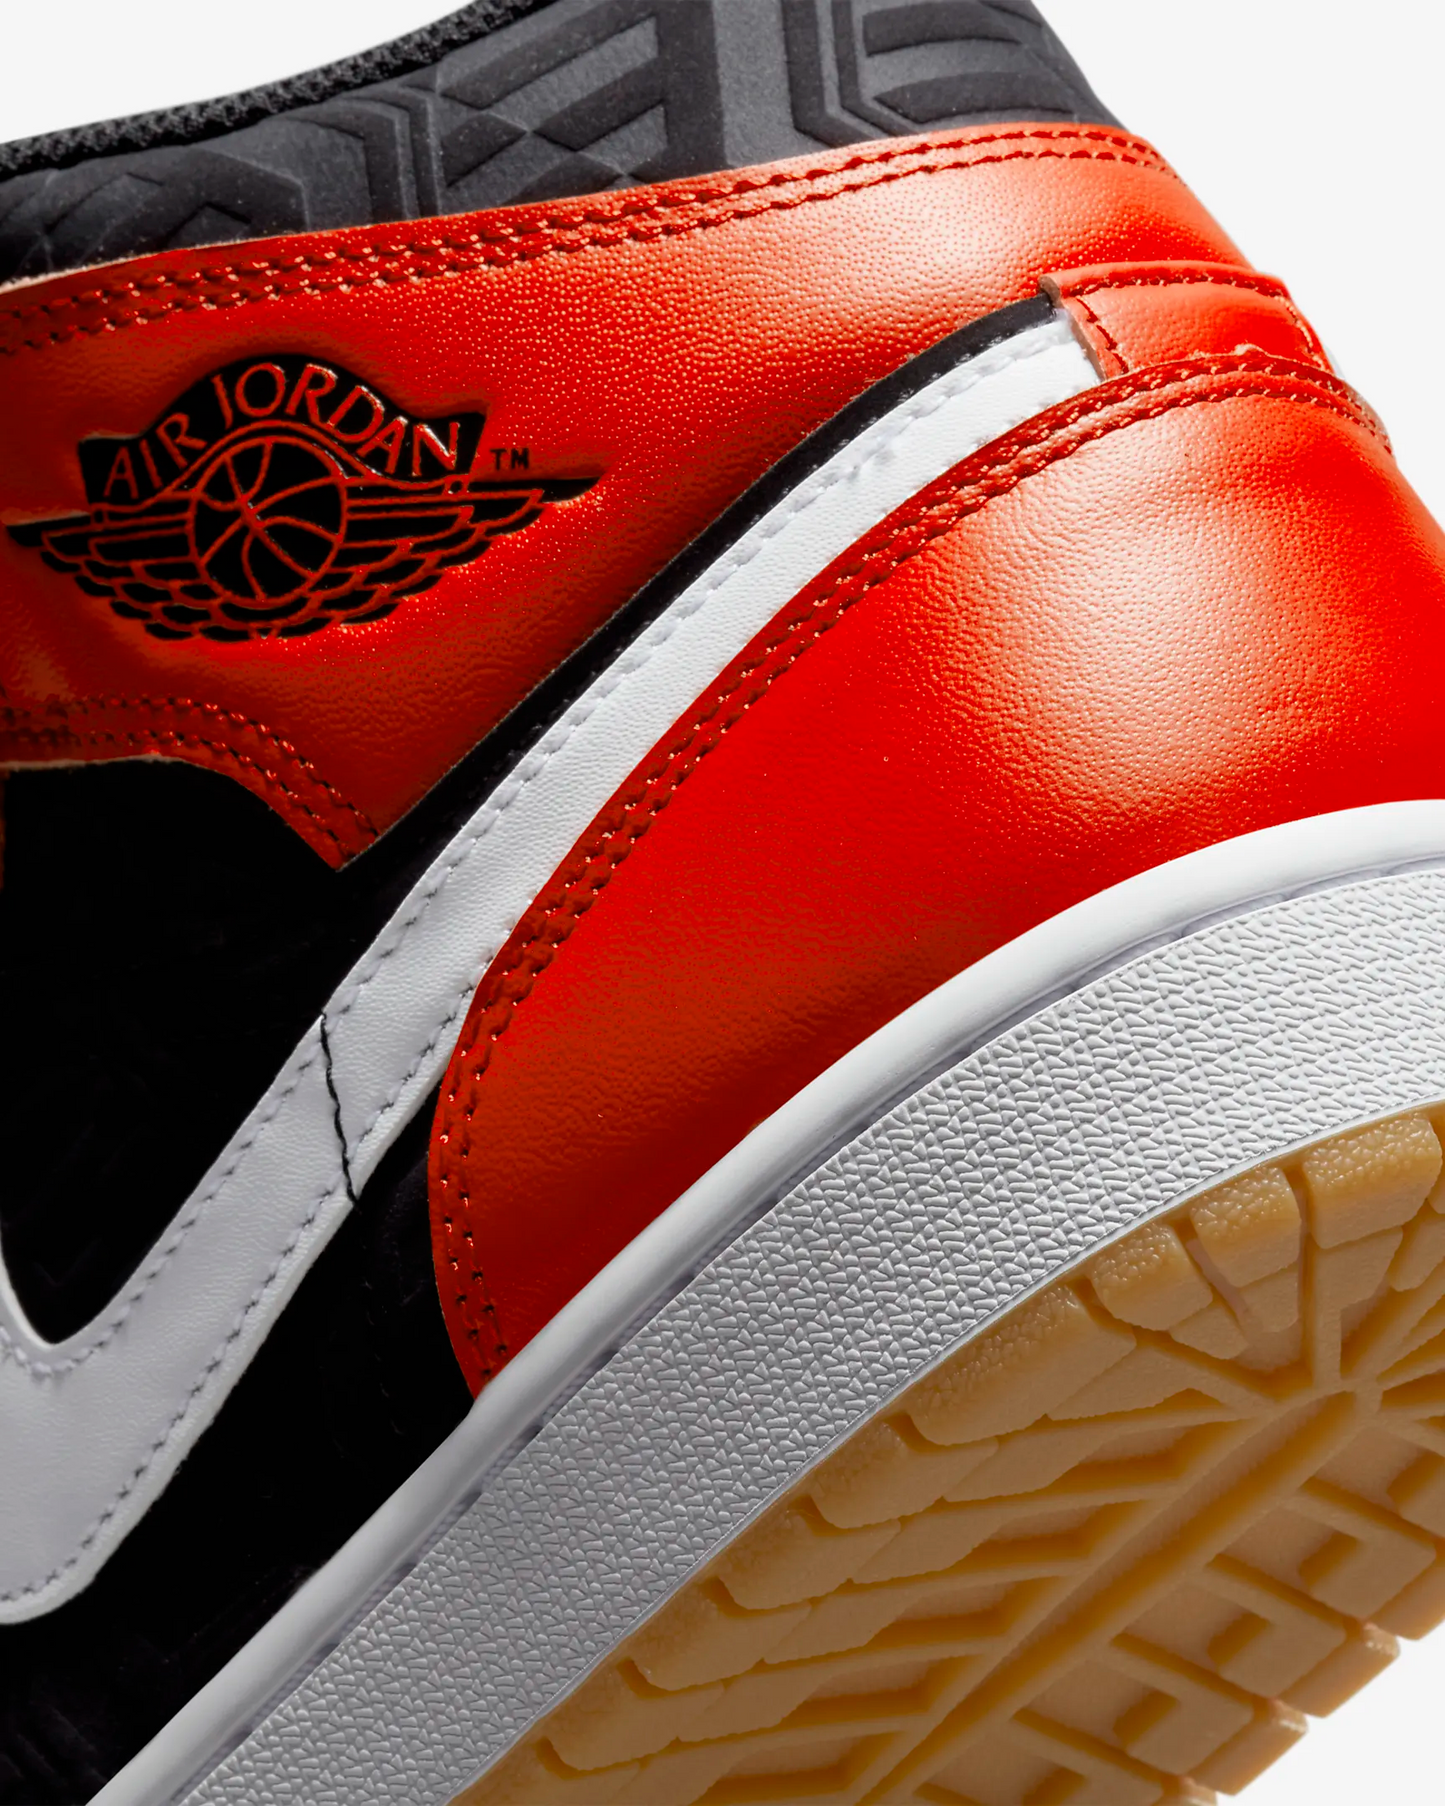 Nike Men's Air Jordan 1 Mid SE Shoes - Black / White / Malachite / Fire Red Sportive